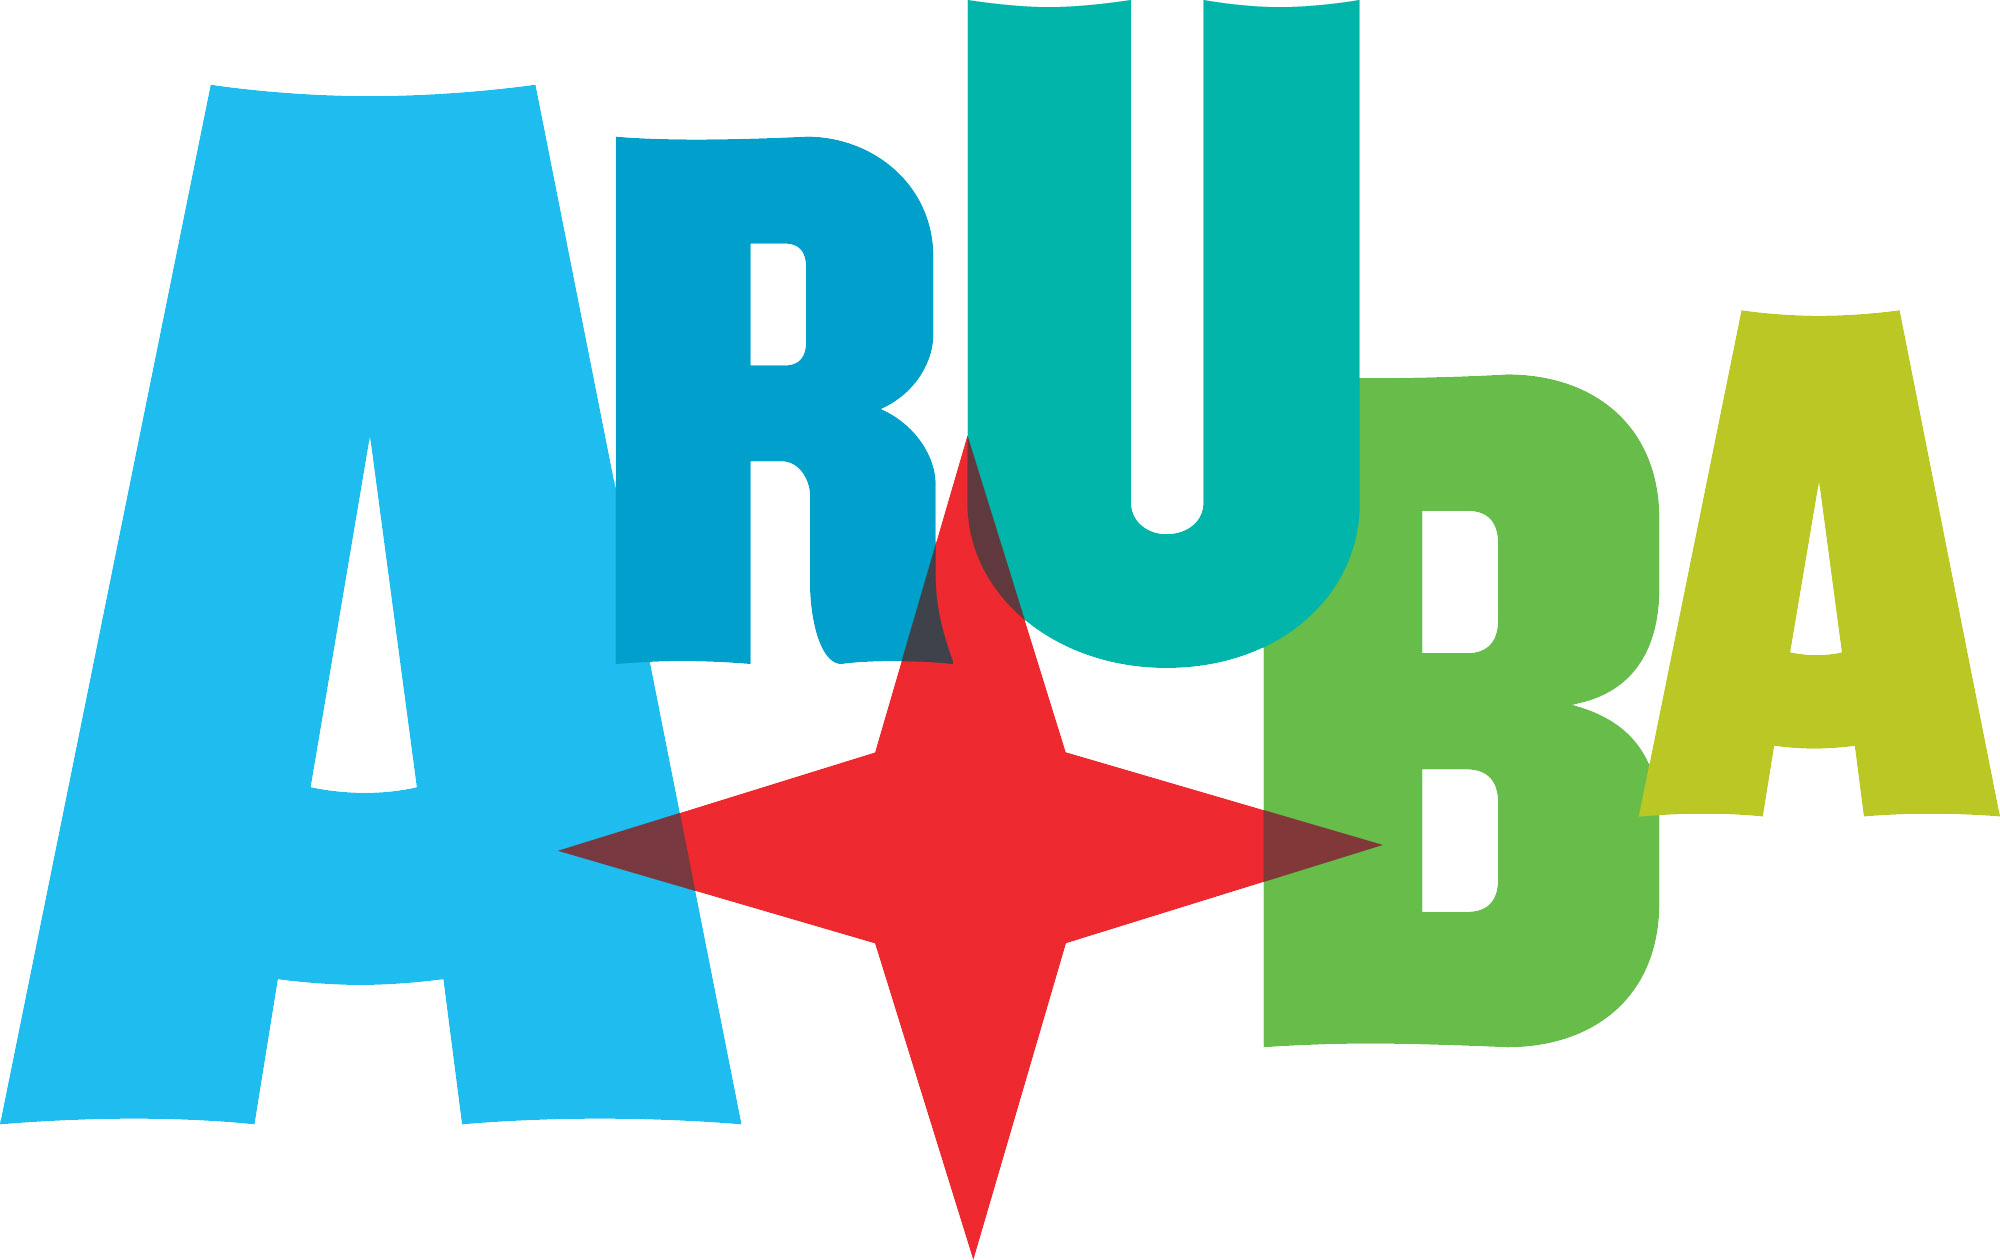 Aruba-Tourism-Strong-